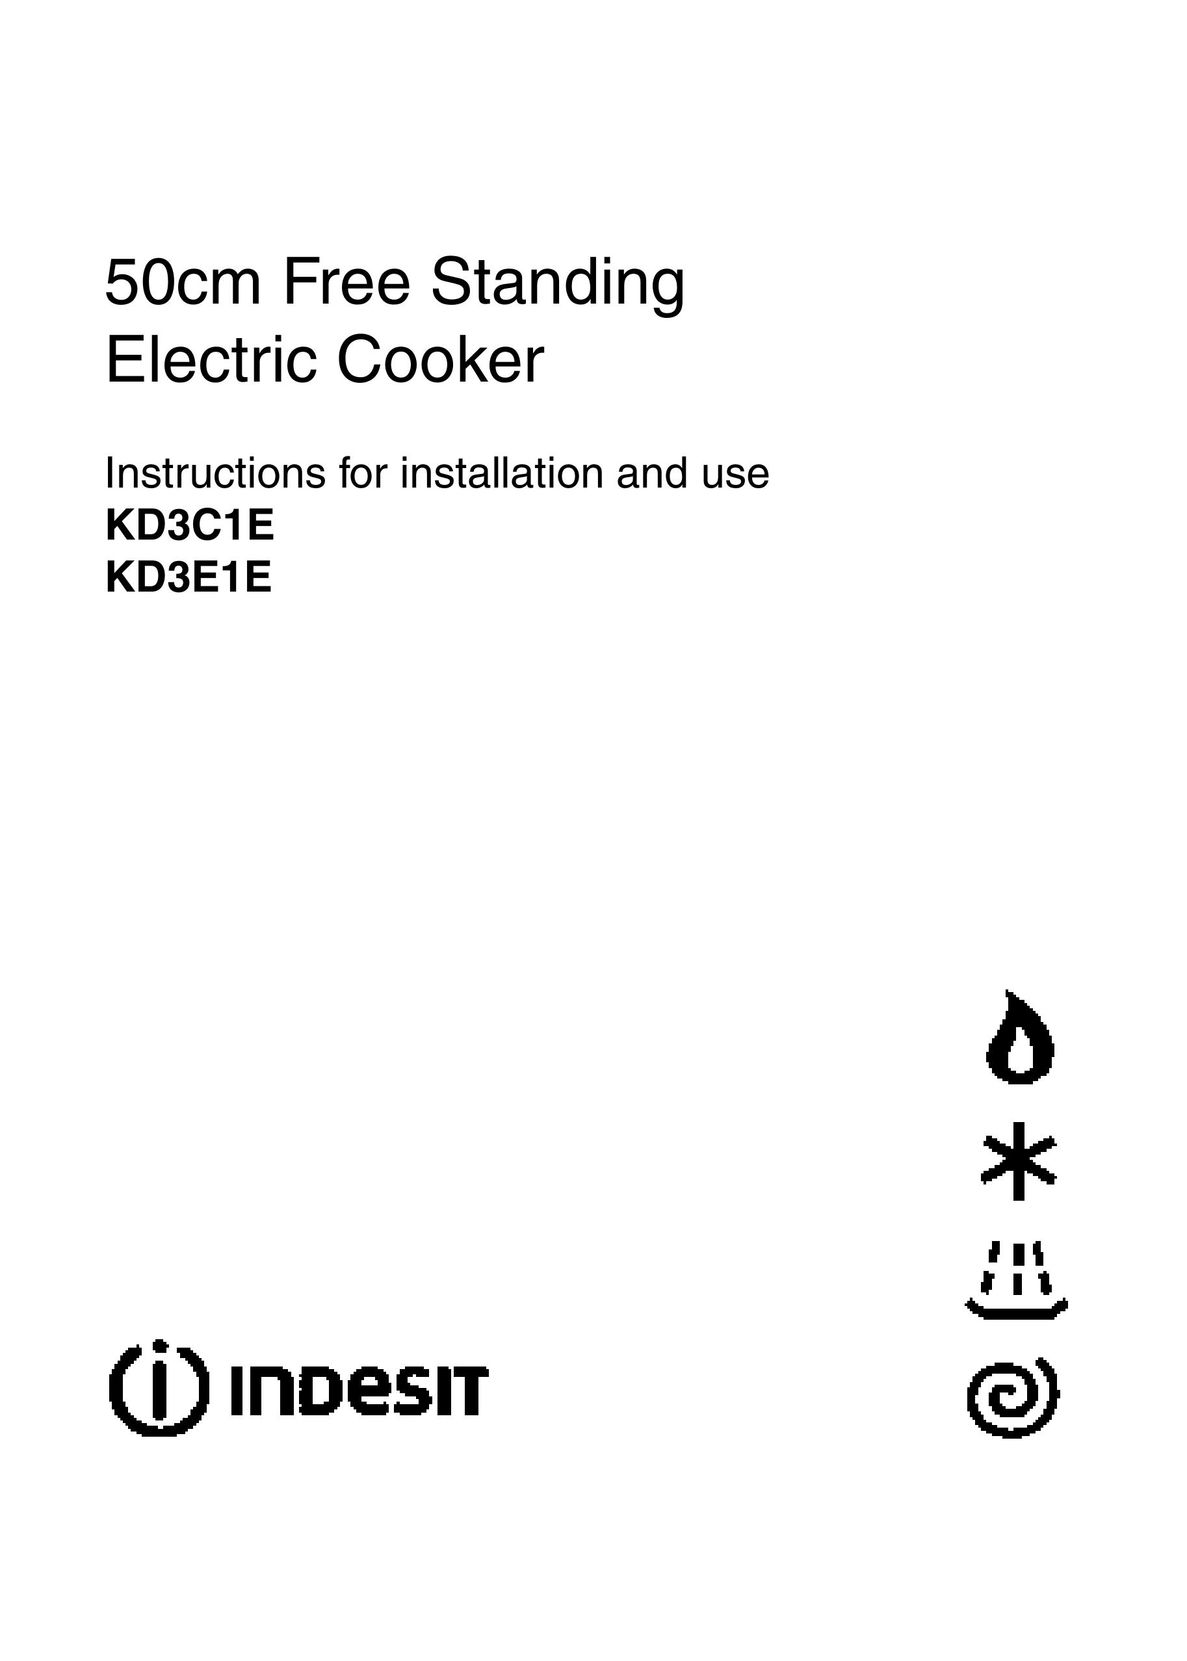 Indesit KD3C1E Electric Pressure Cooker User Manual